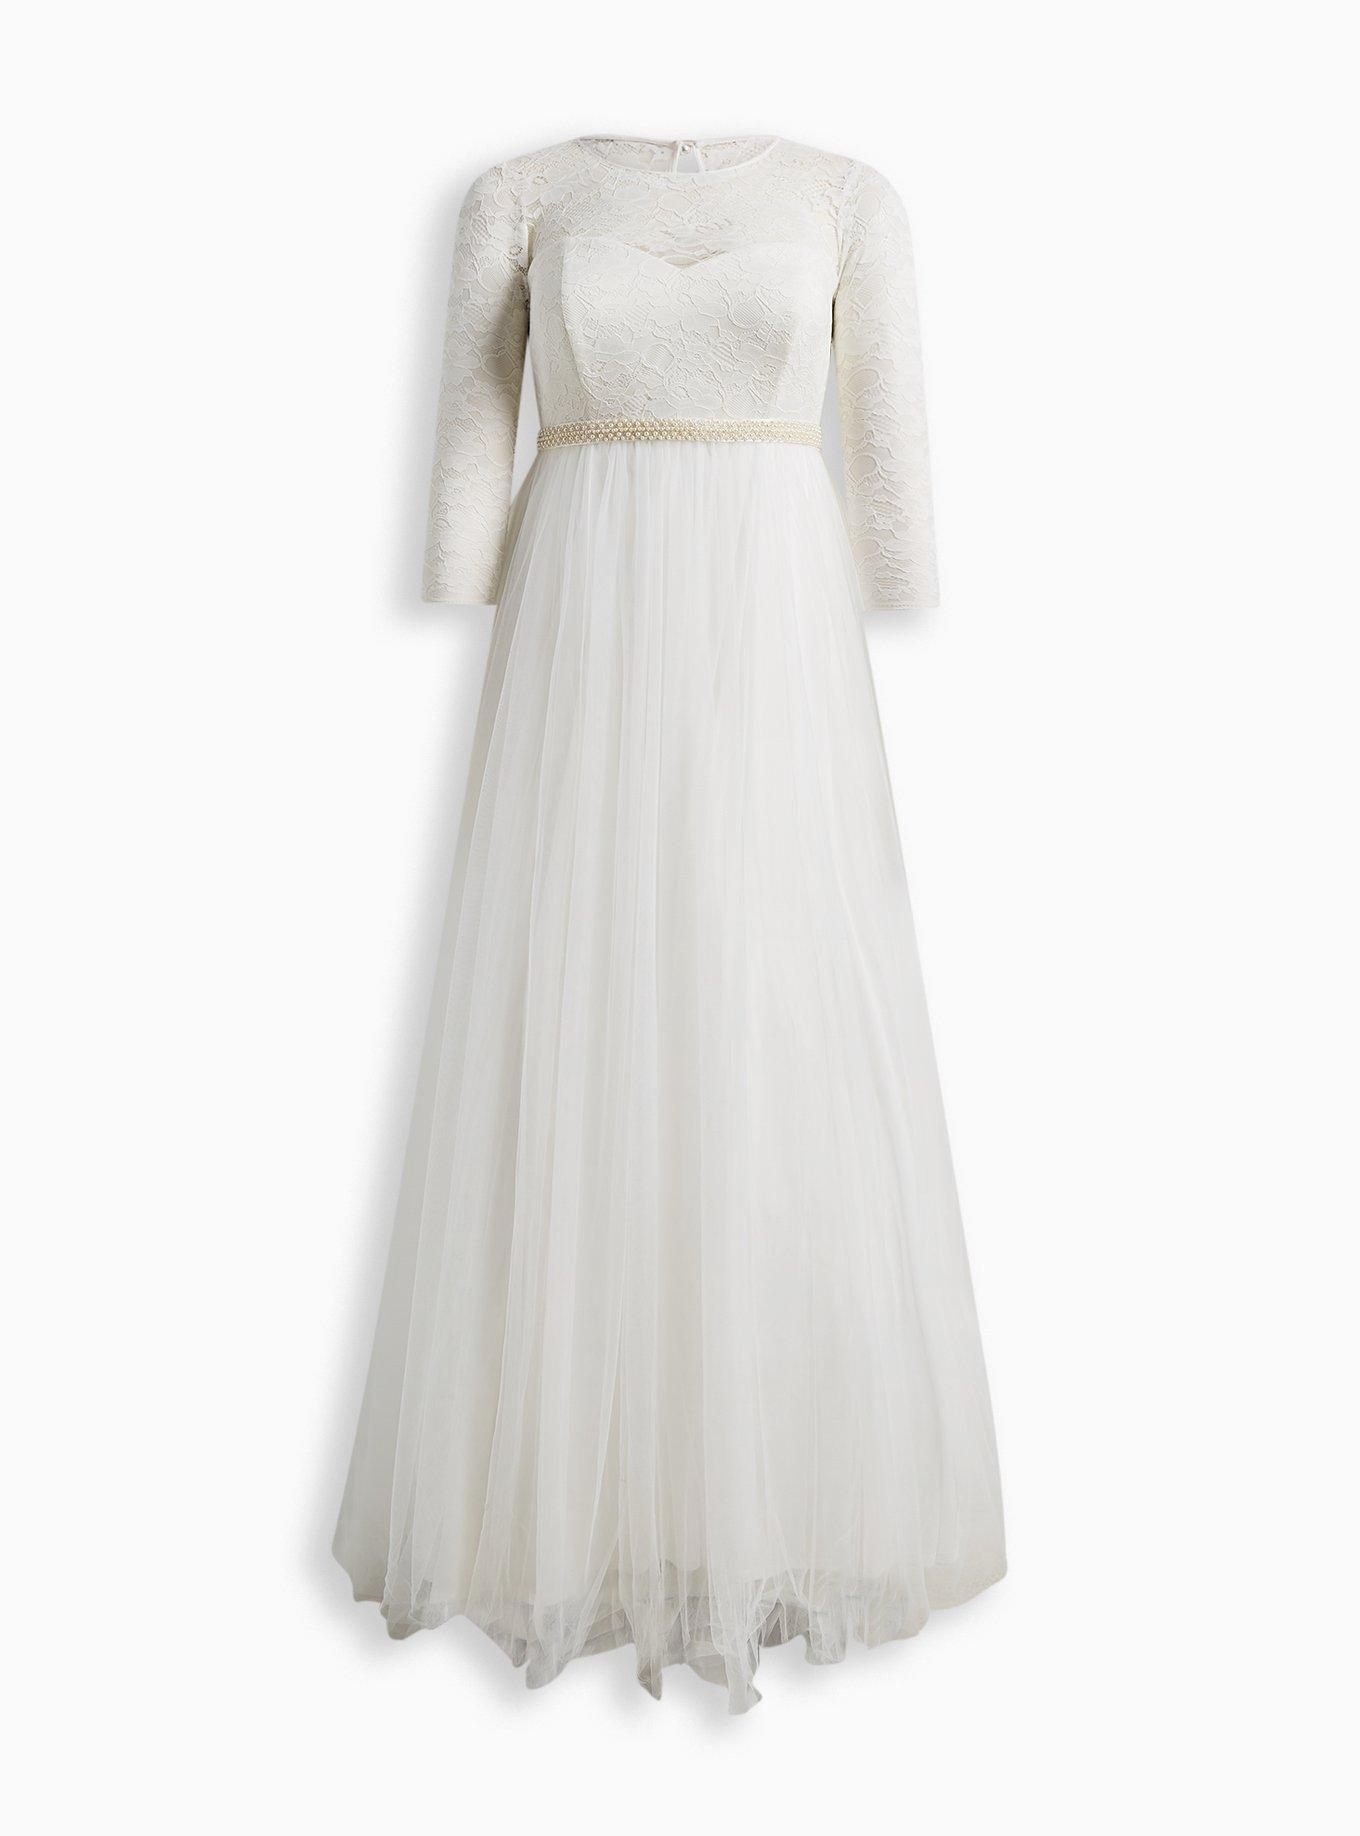 Plus Size - Ivory Lace & Tulle Beaded Sash A-Line Wedding Dress - Torrid